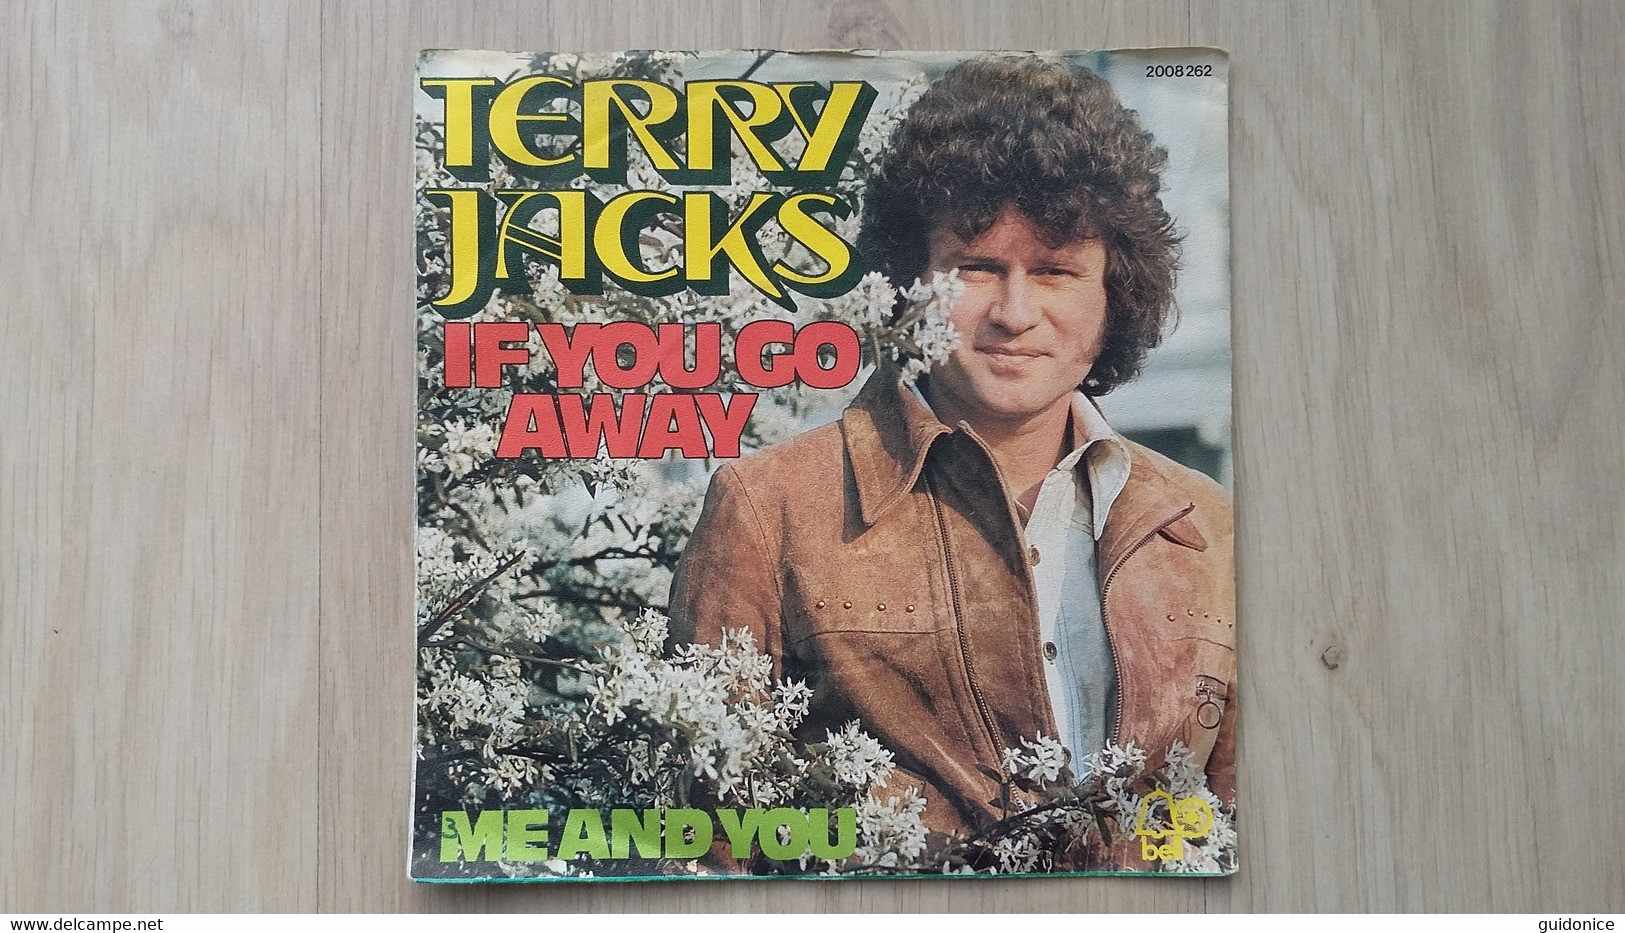 Terry Jacks - If You Go Away - Disco, Pop